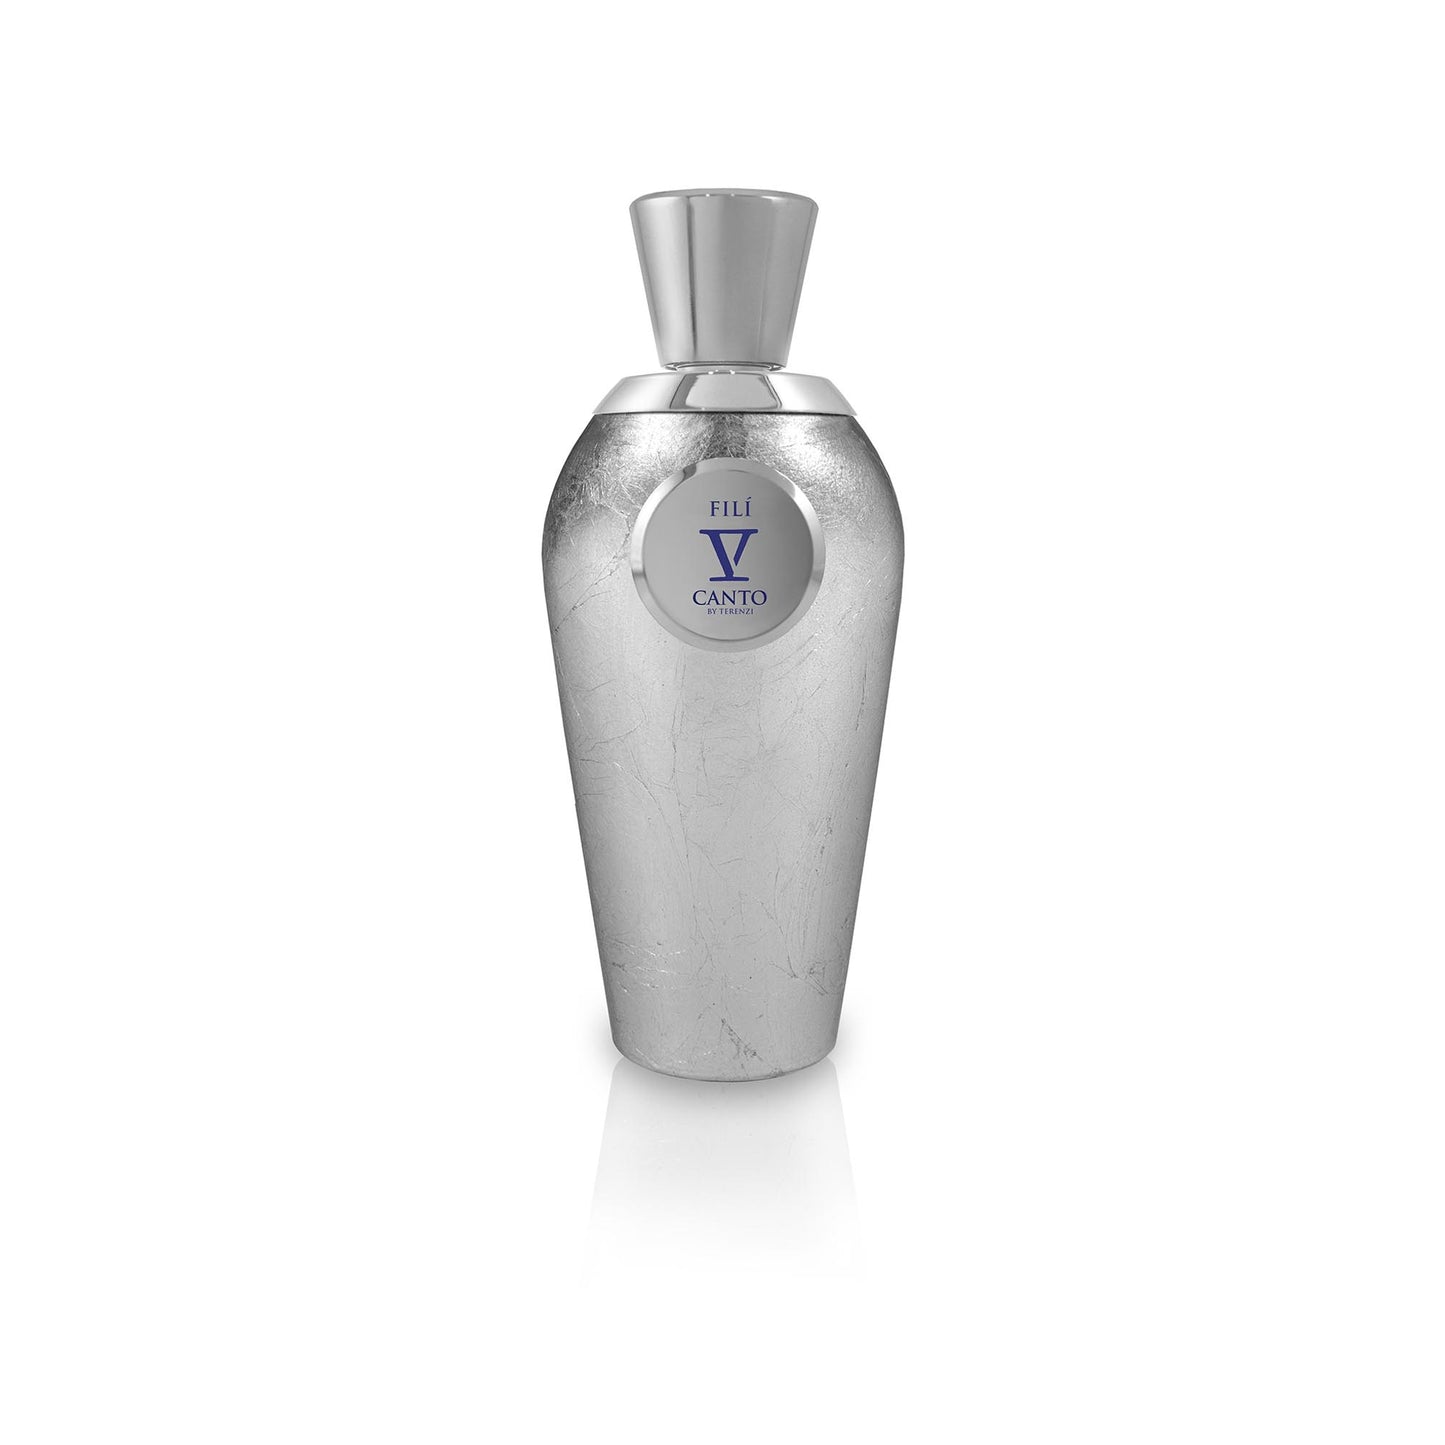 FILI 1.5ml Sample Vial - Extrait de Parfum